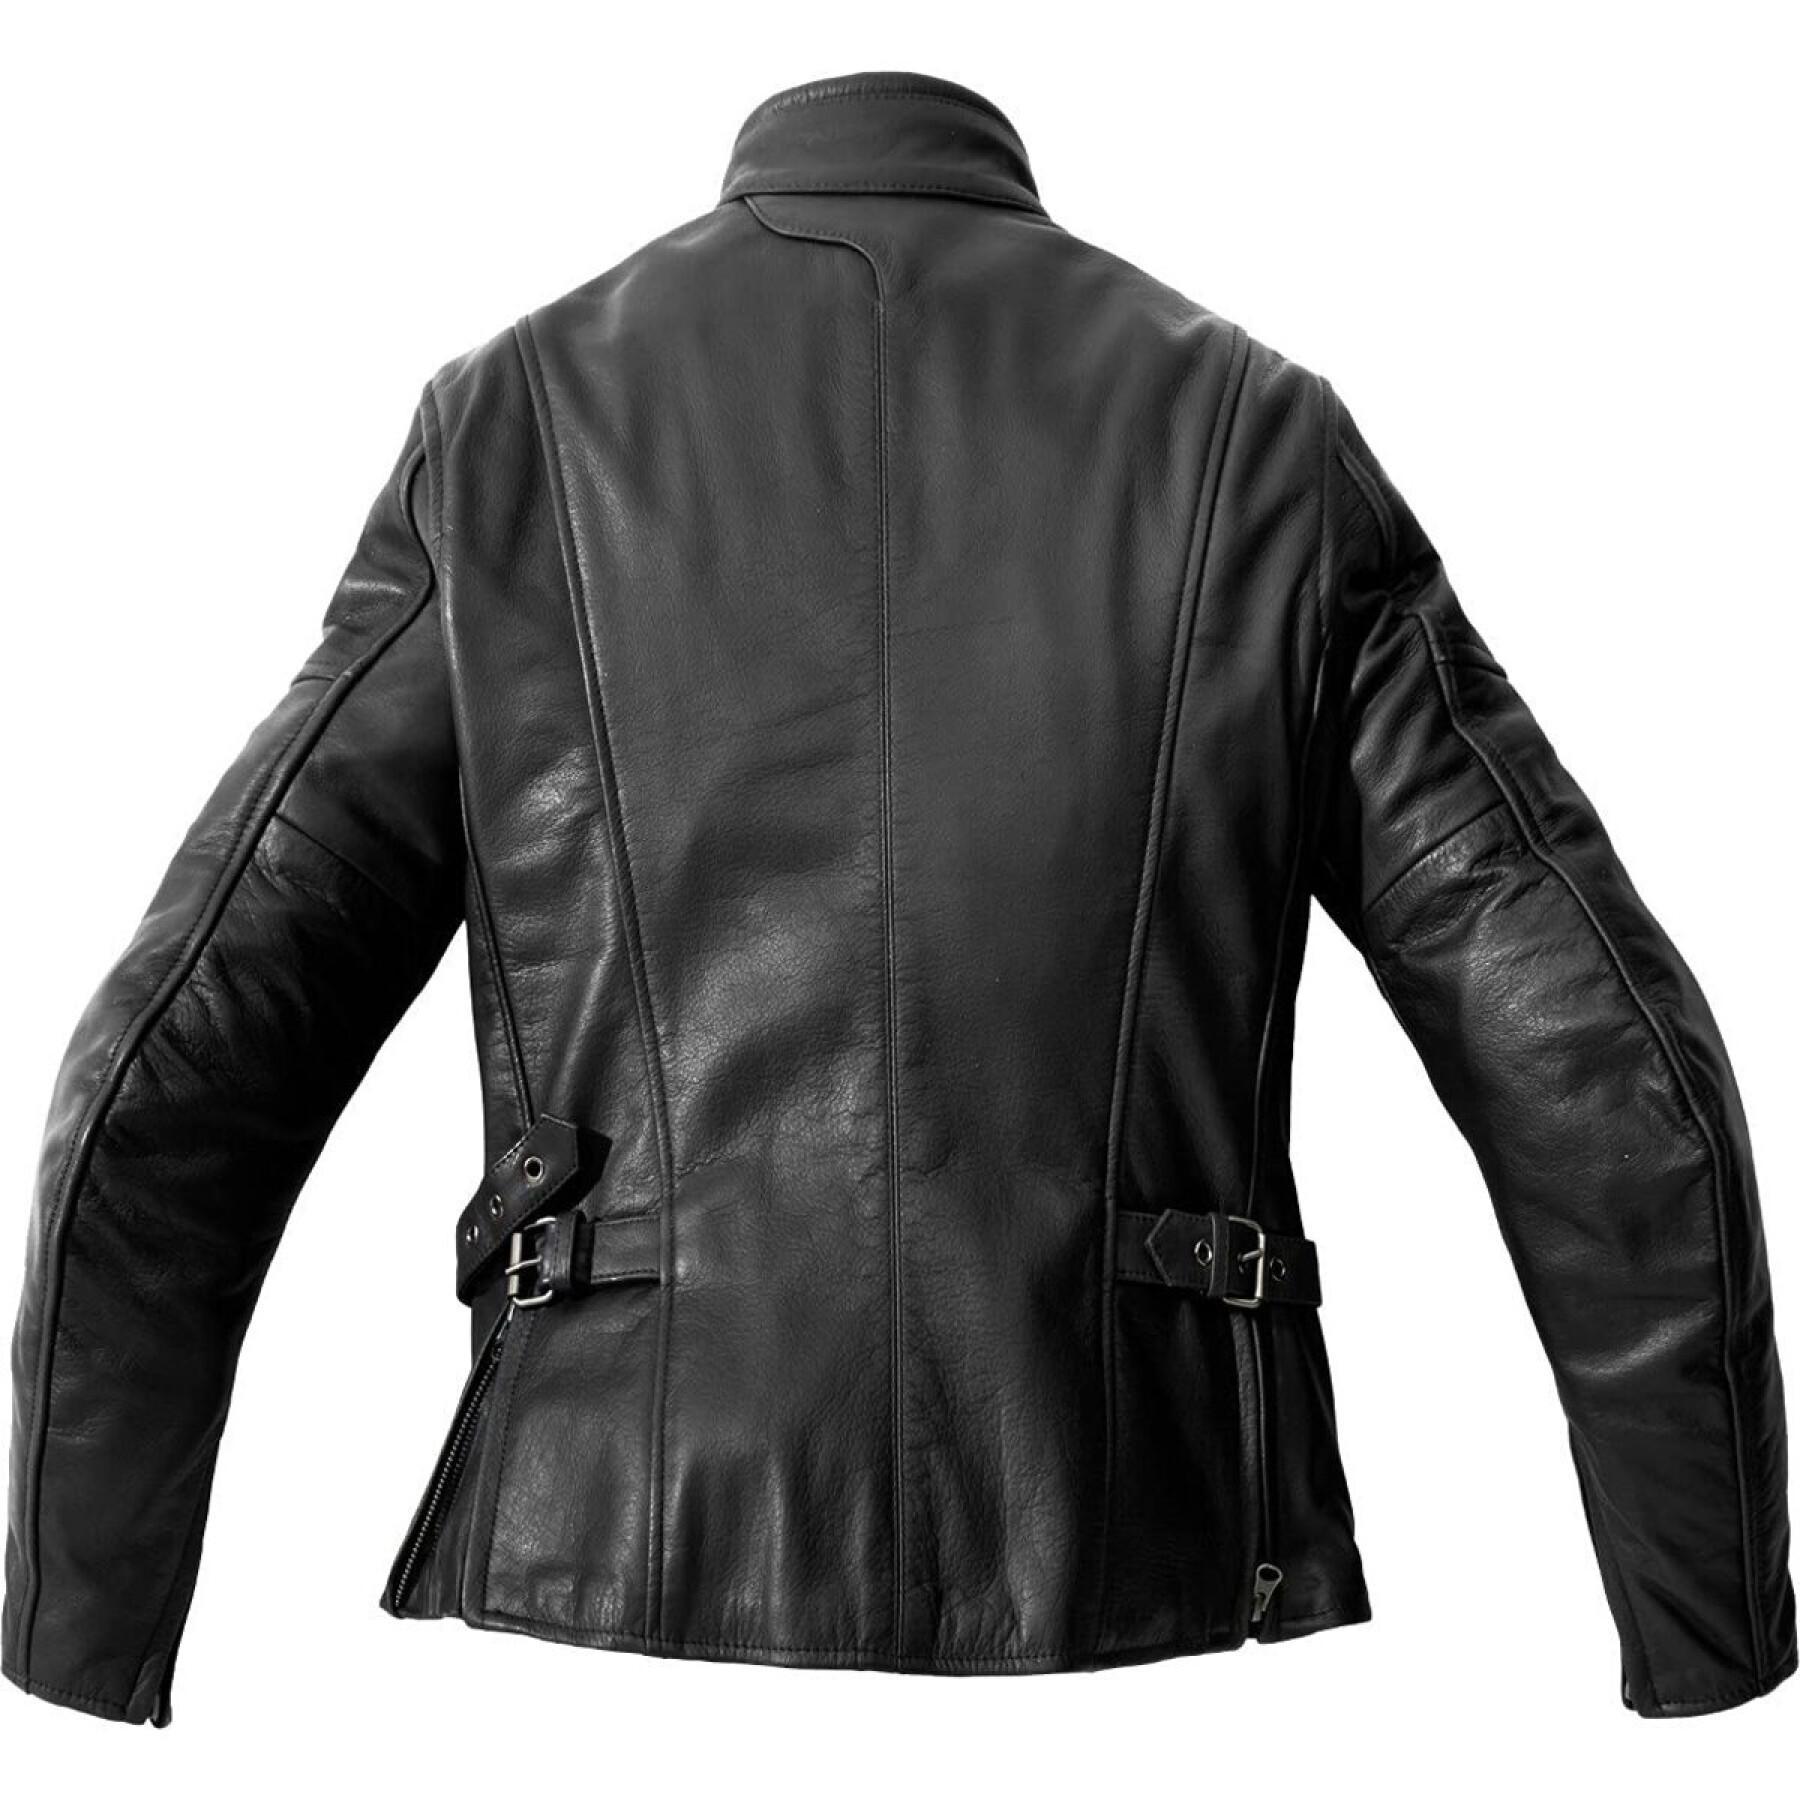 Leather motorcycle jacket woman Spidi Mack